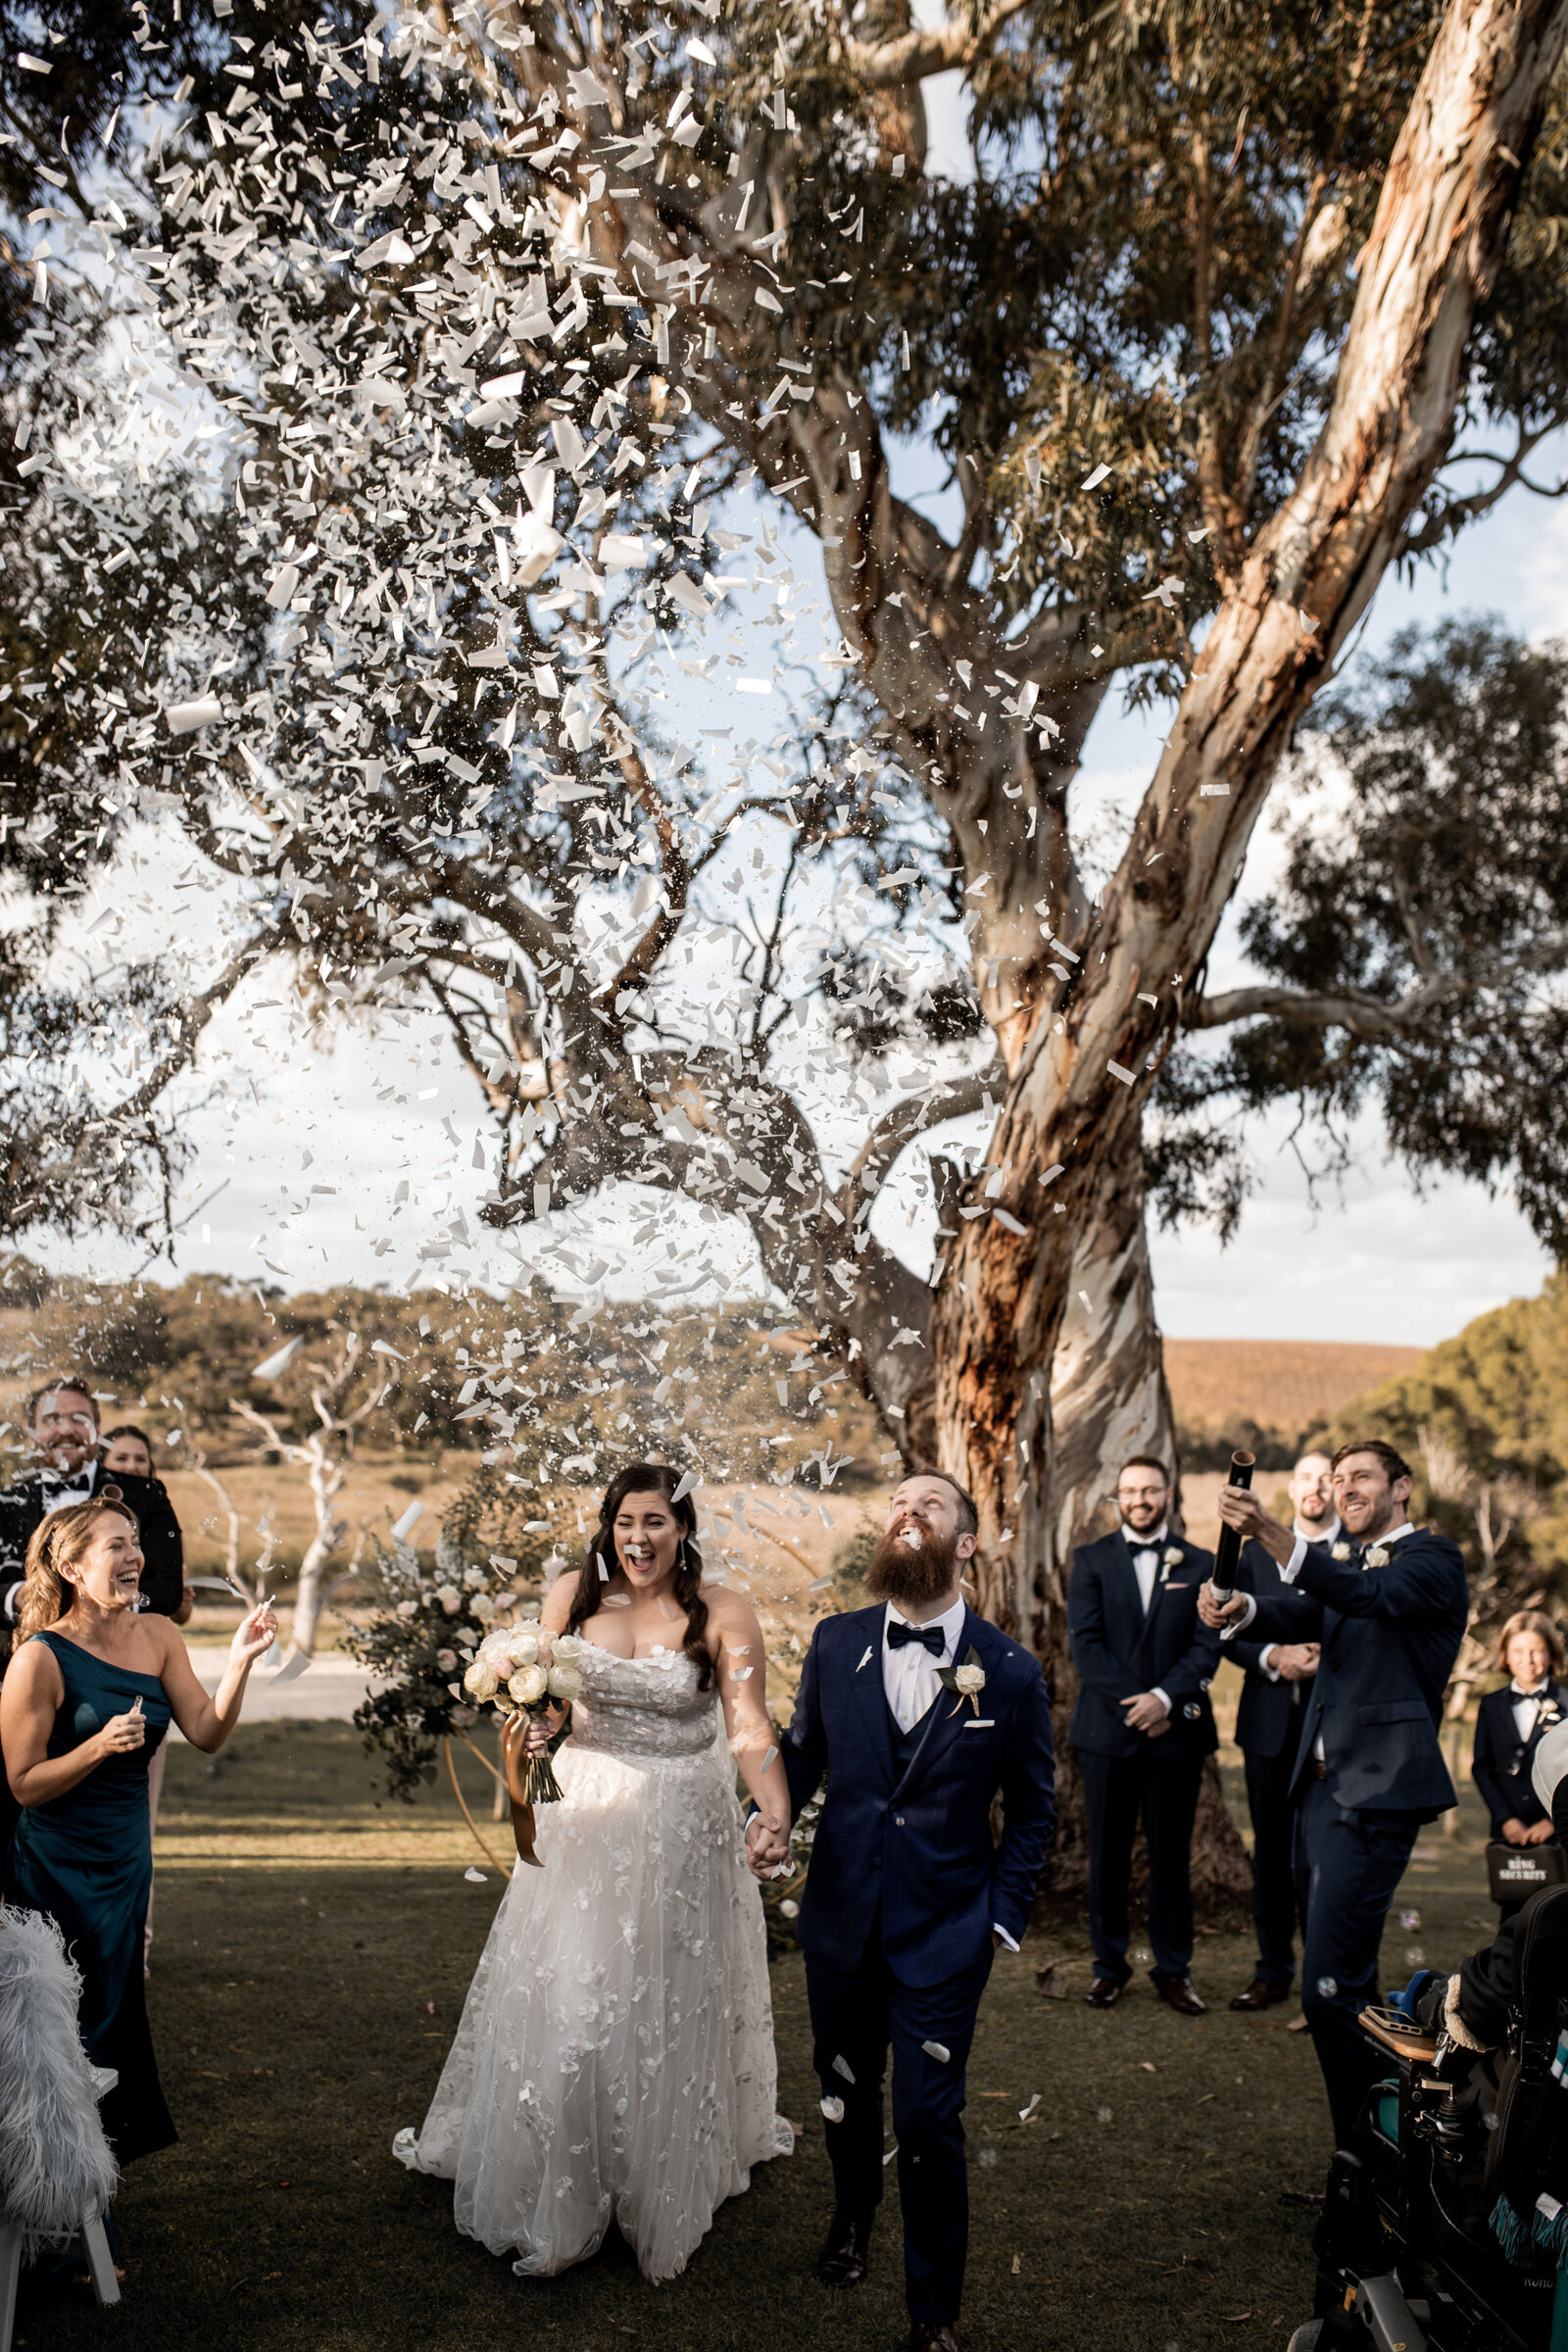 Jazmyn-Thomas-Rexvil-Photography-Adelaide-Wedding-Photographer-320